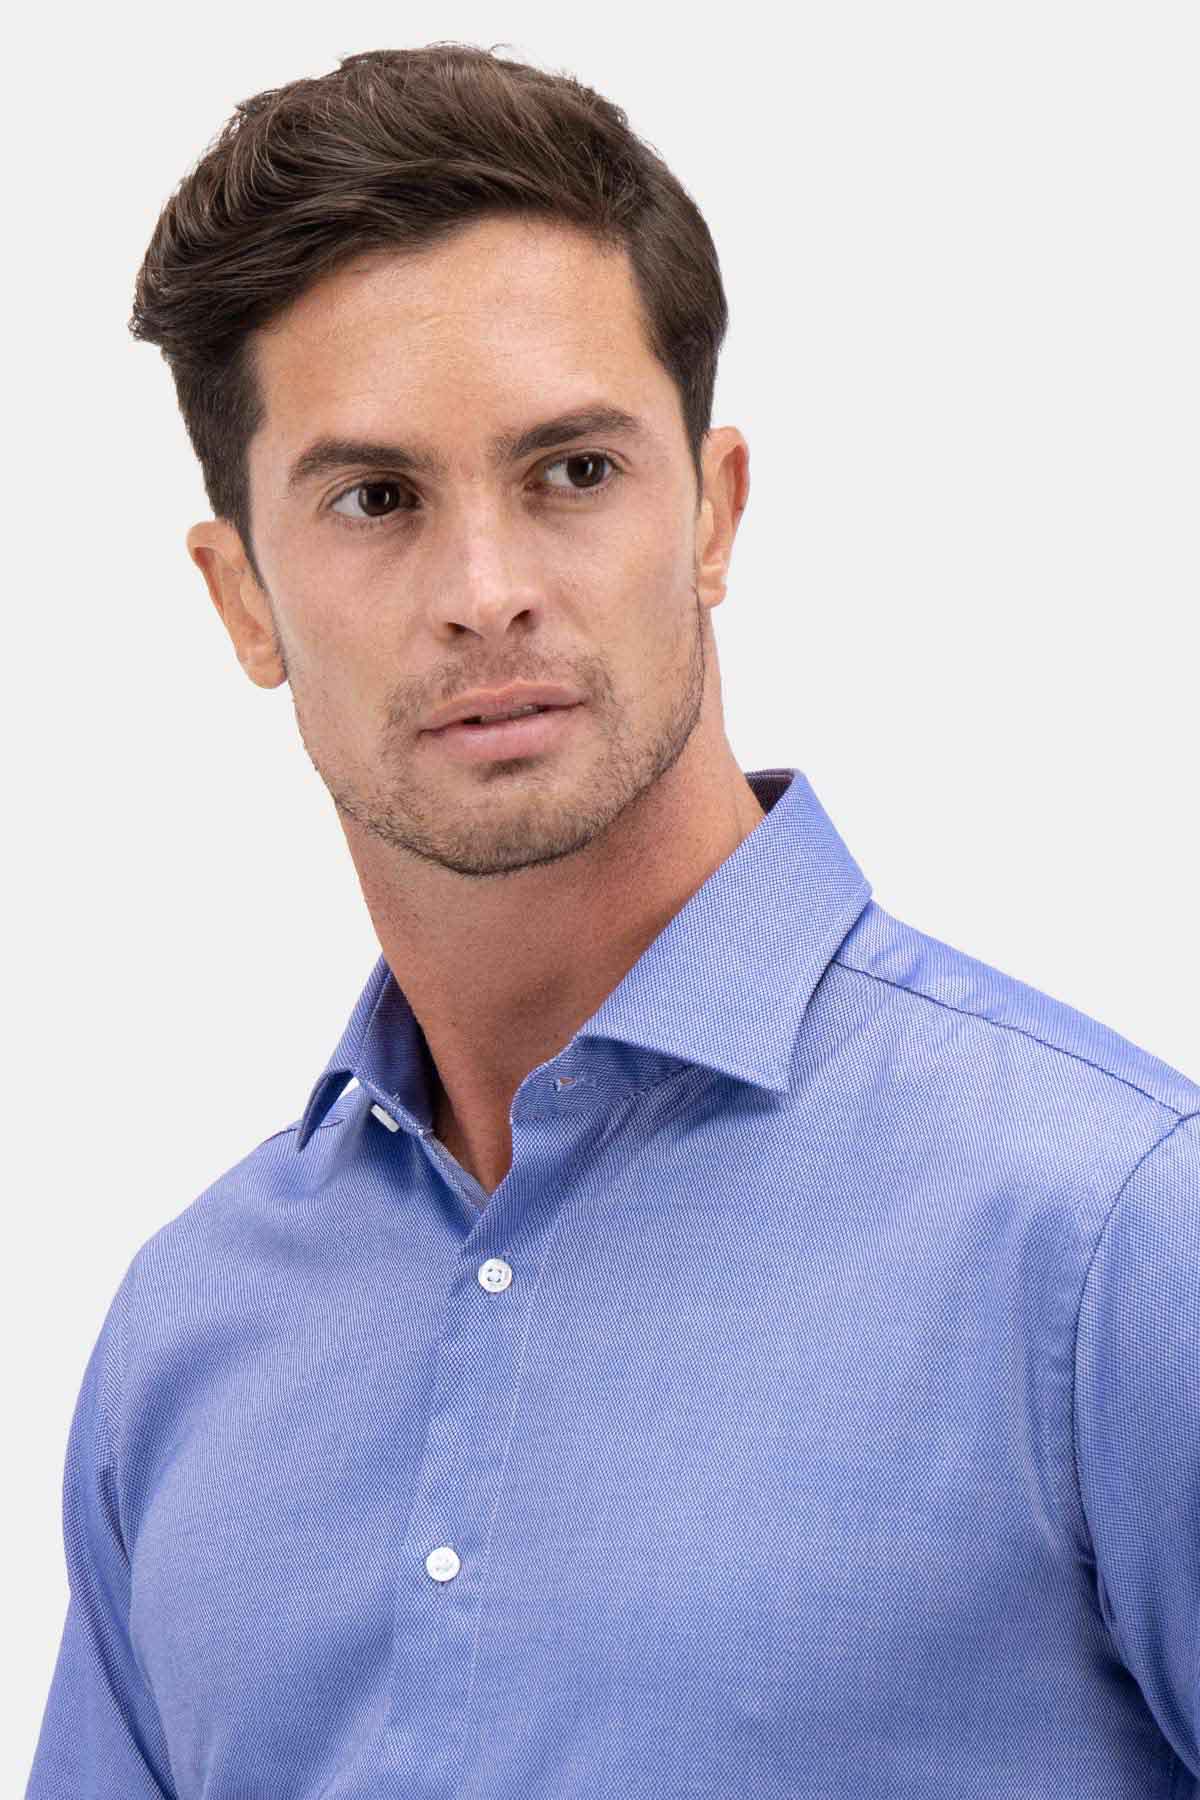 Camisa Roberts Easy Care Slim Fit Color Azul Marino